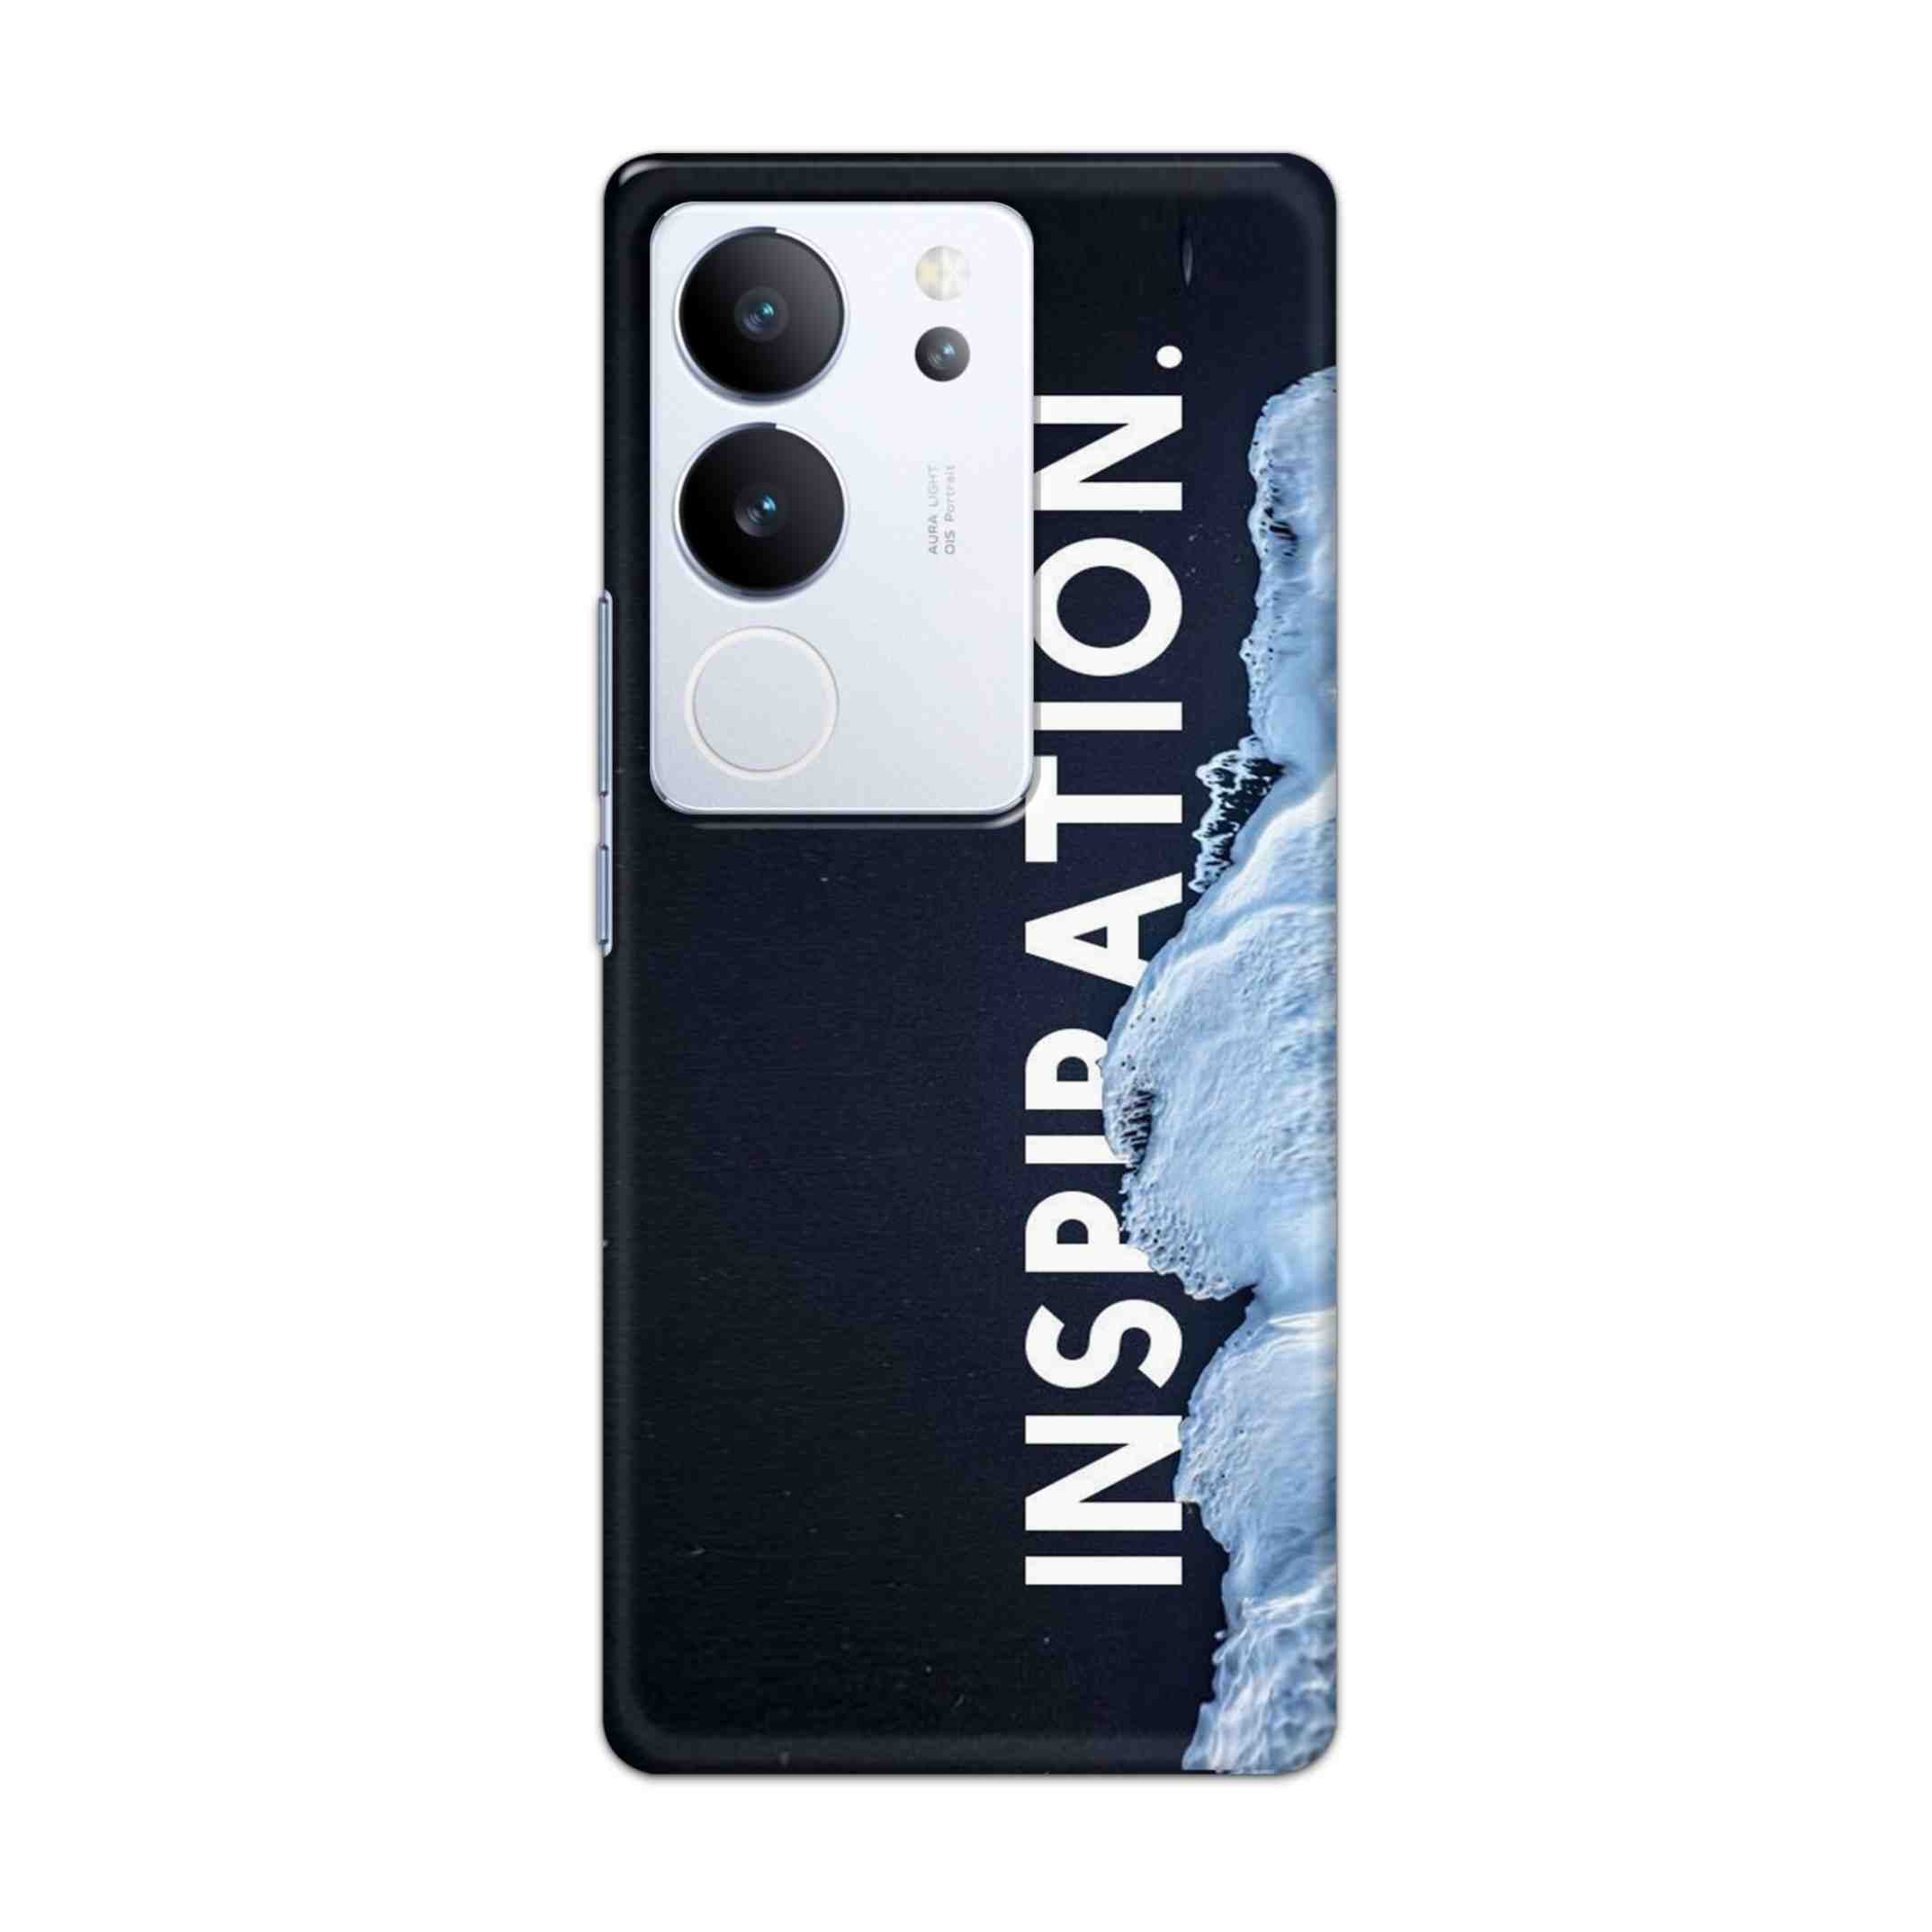 Buy Inspiration Hard Back Mobile Phone Case/Cover For Vivo V29 / V29 Pro Online